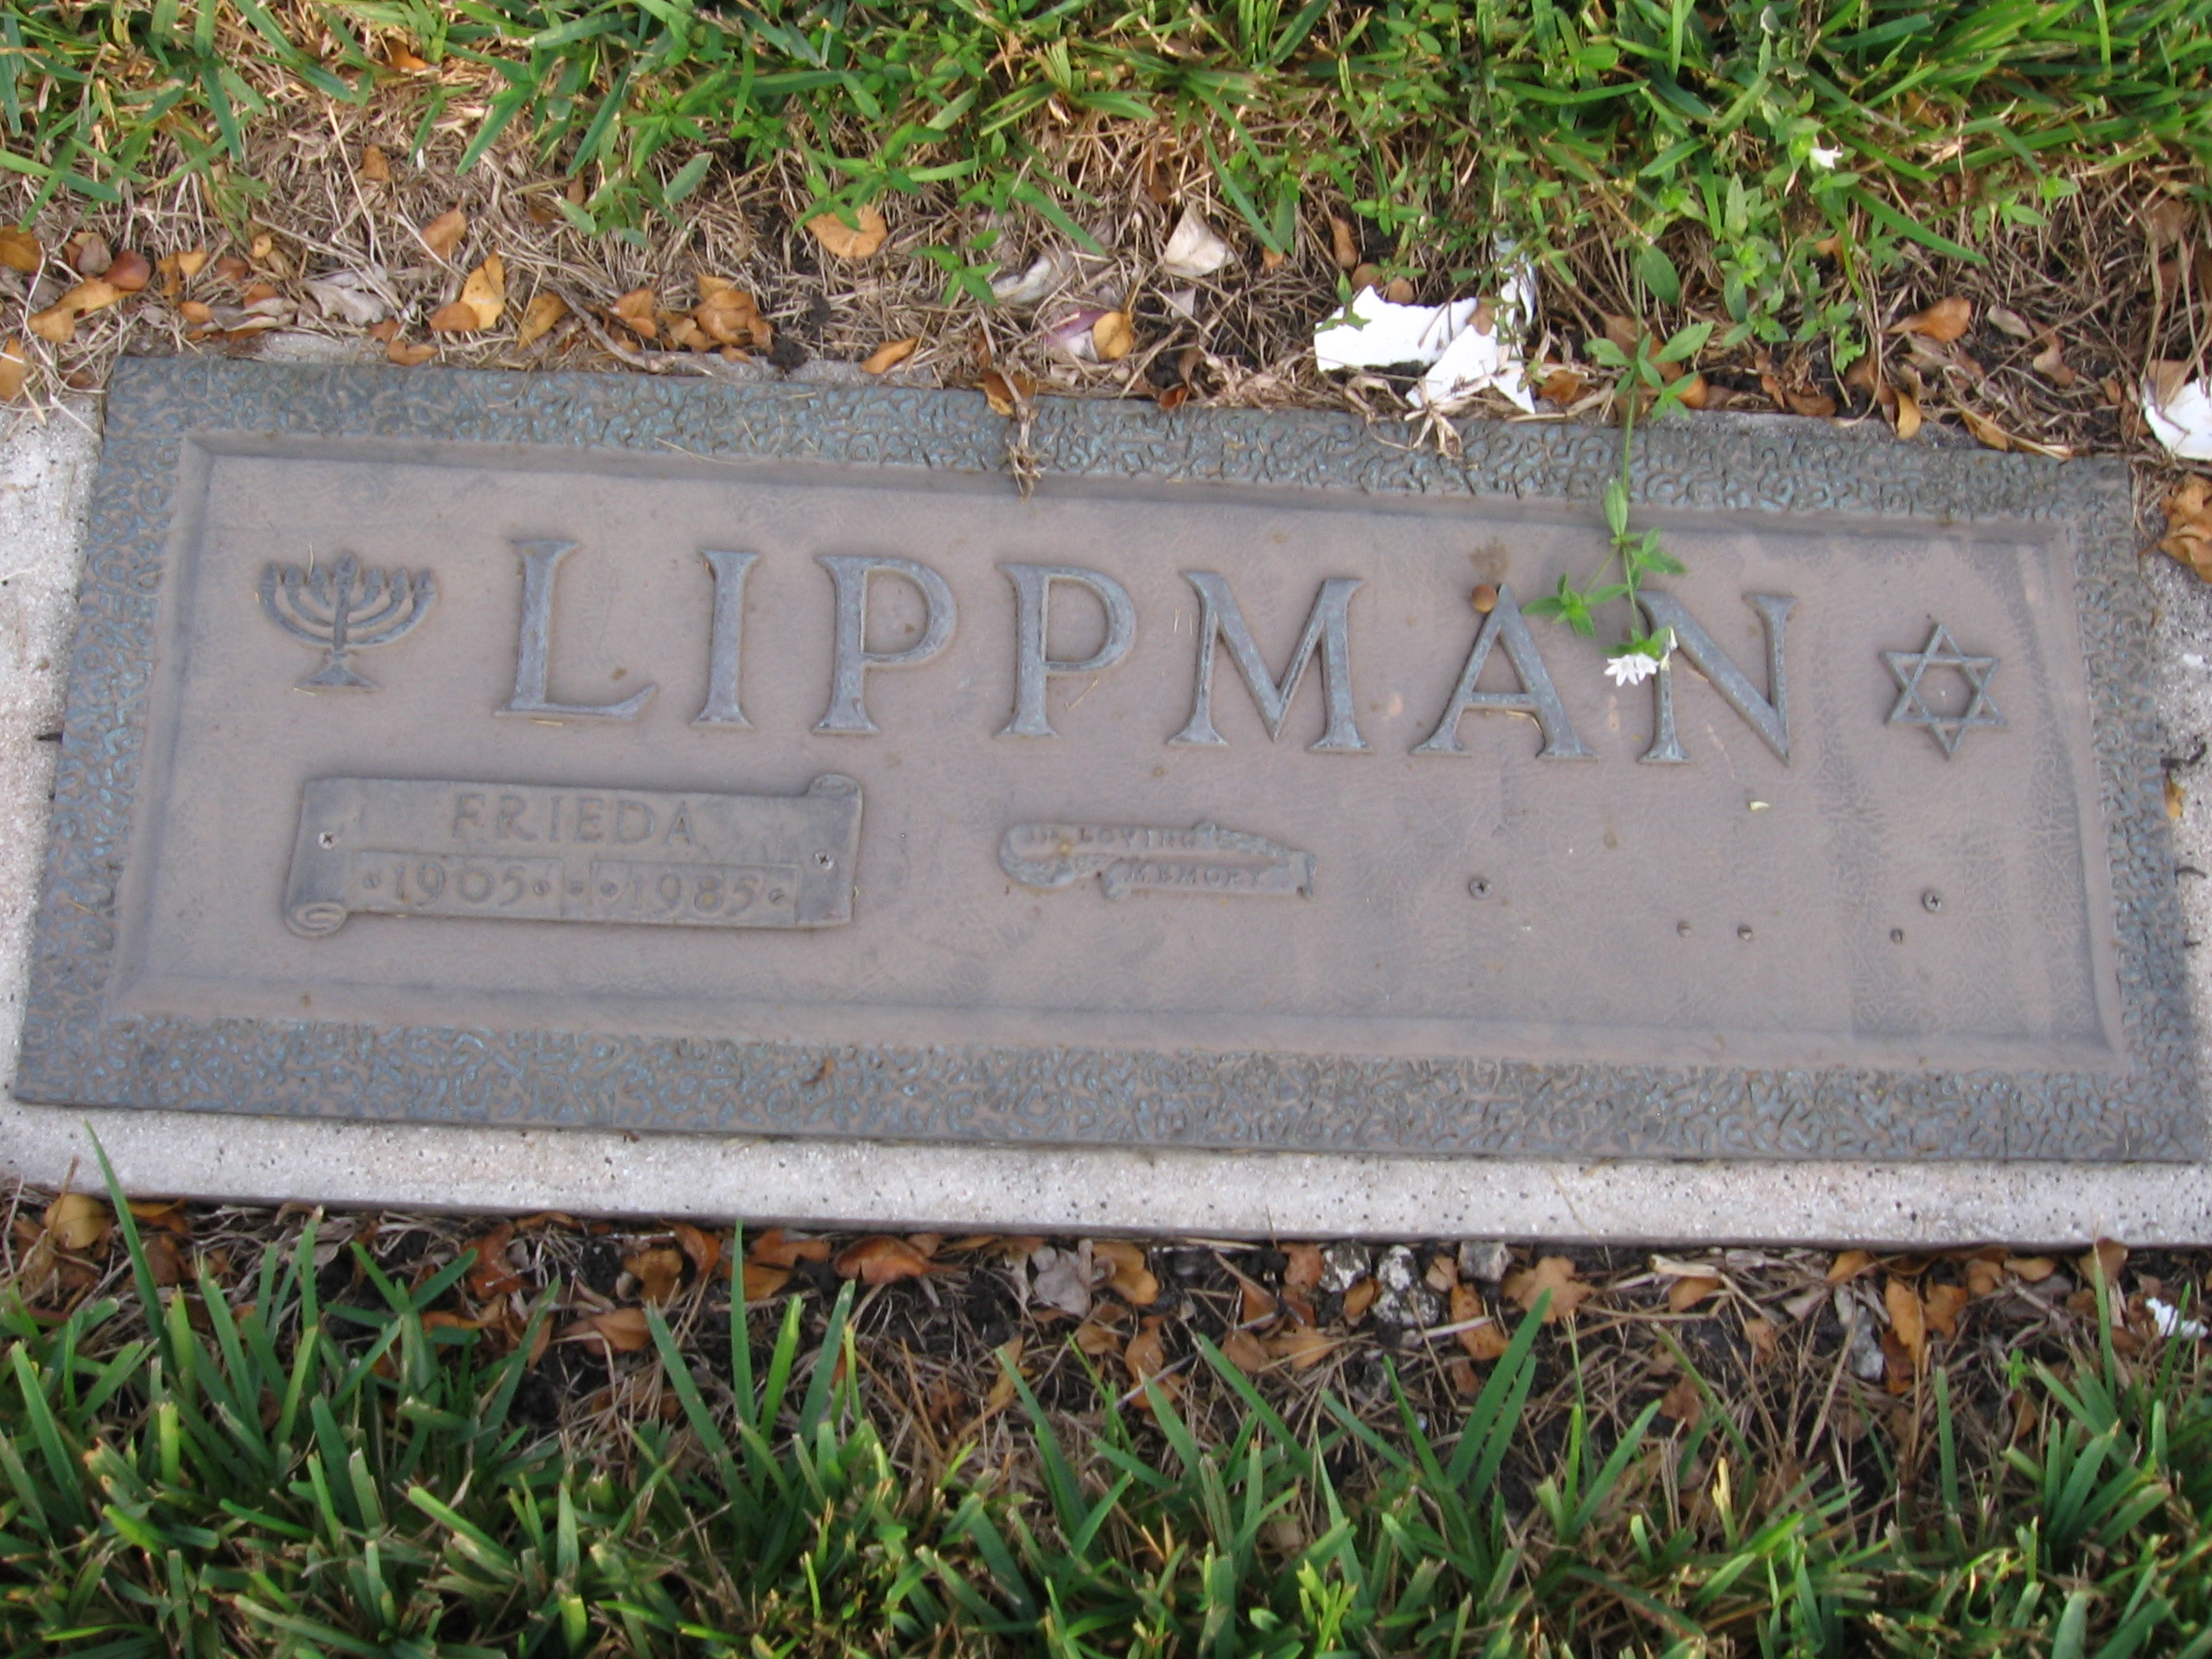 Frieda Lippman